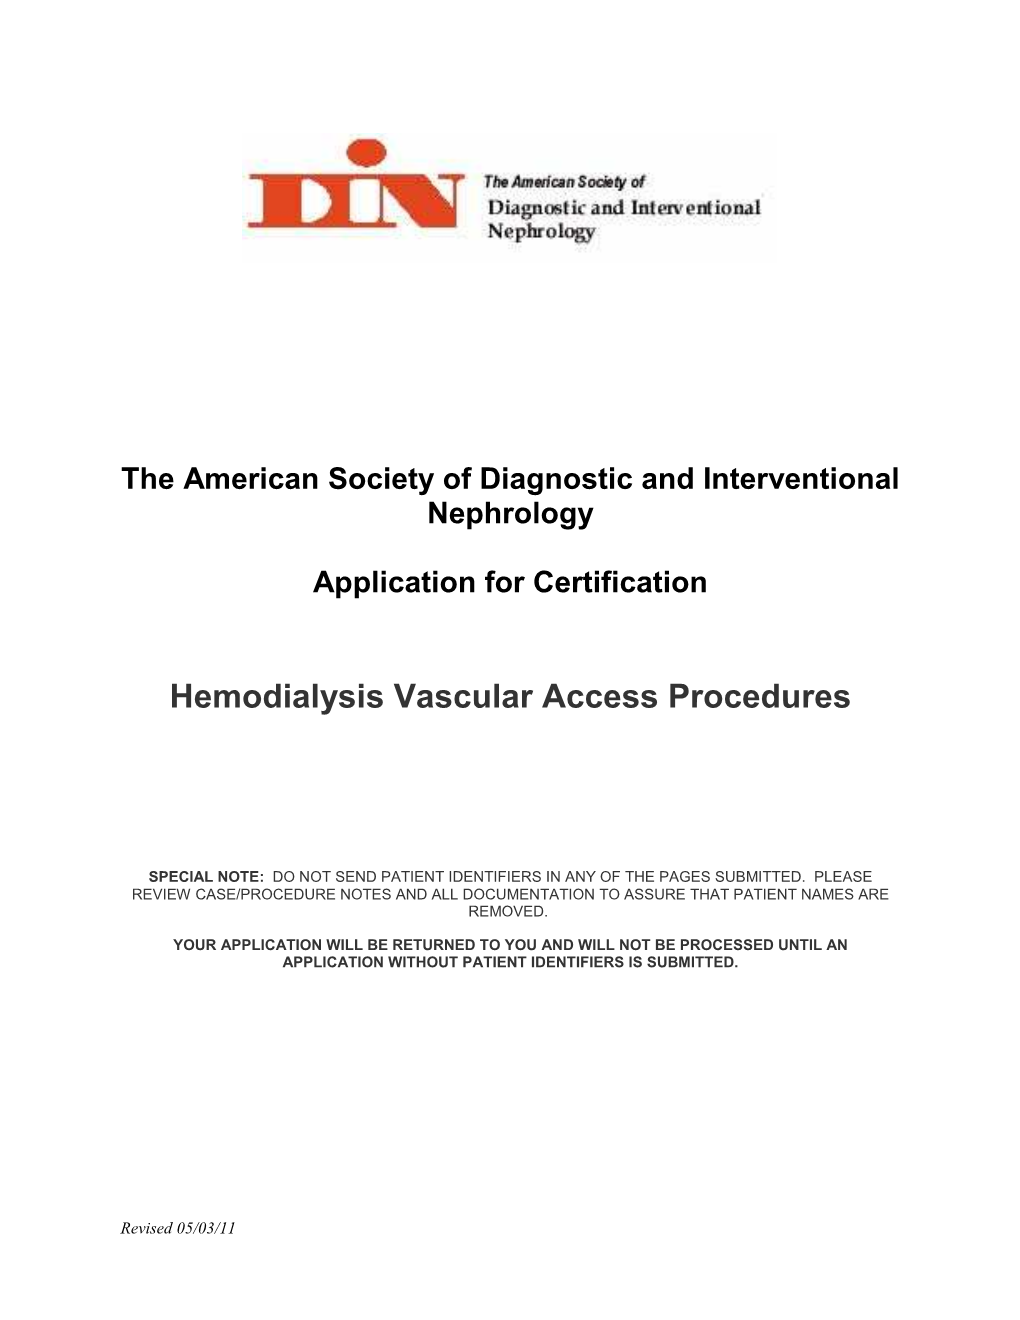 Hemodialysis Vascular Access Procedures